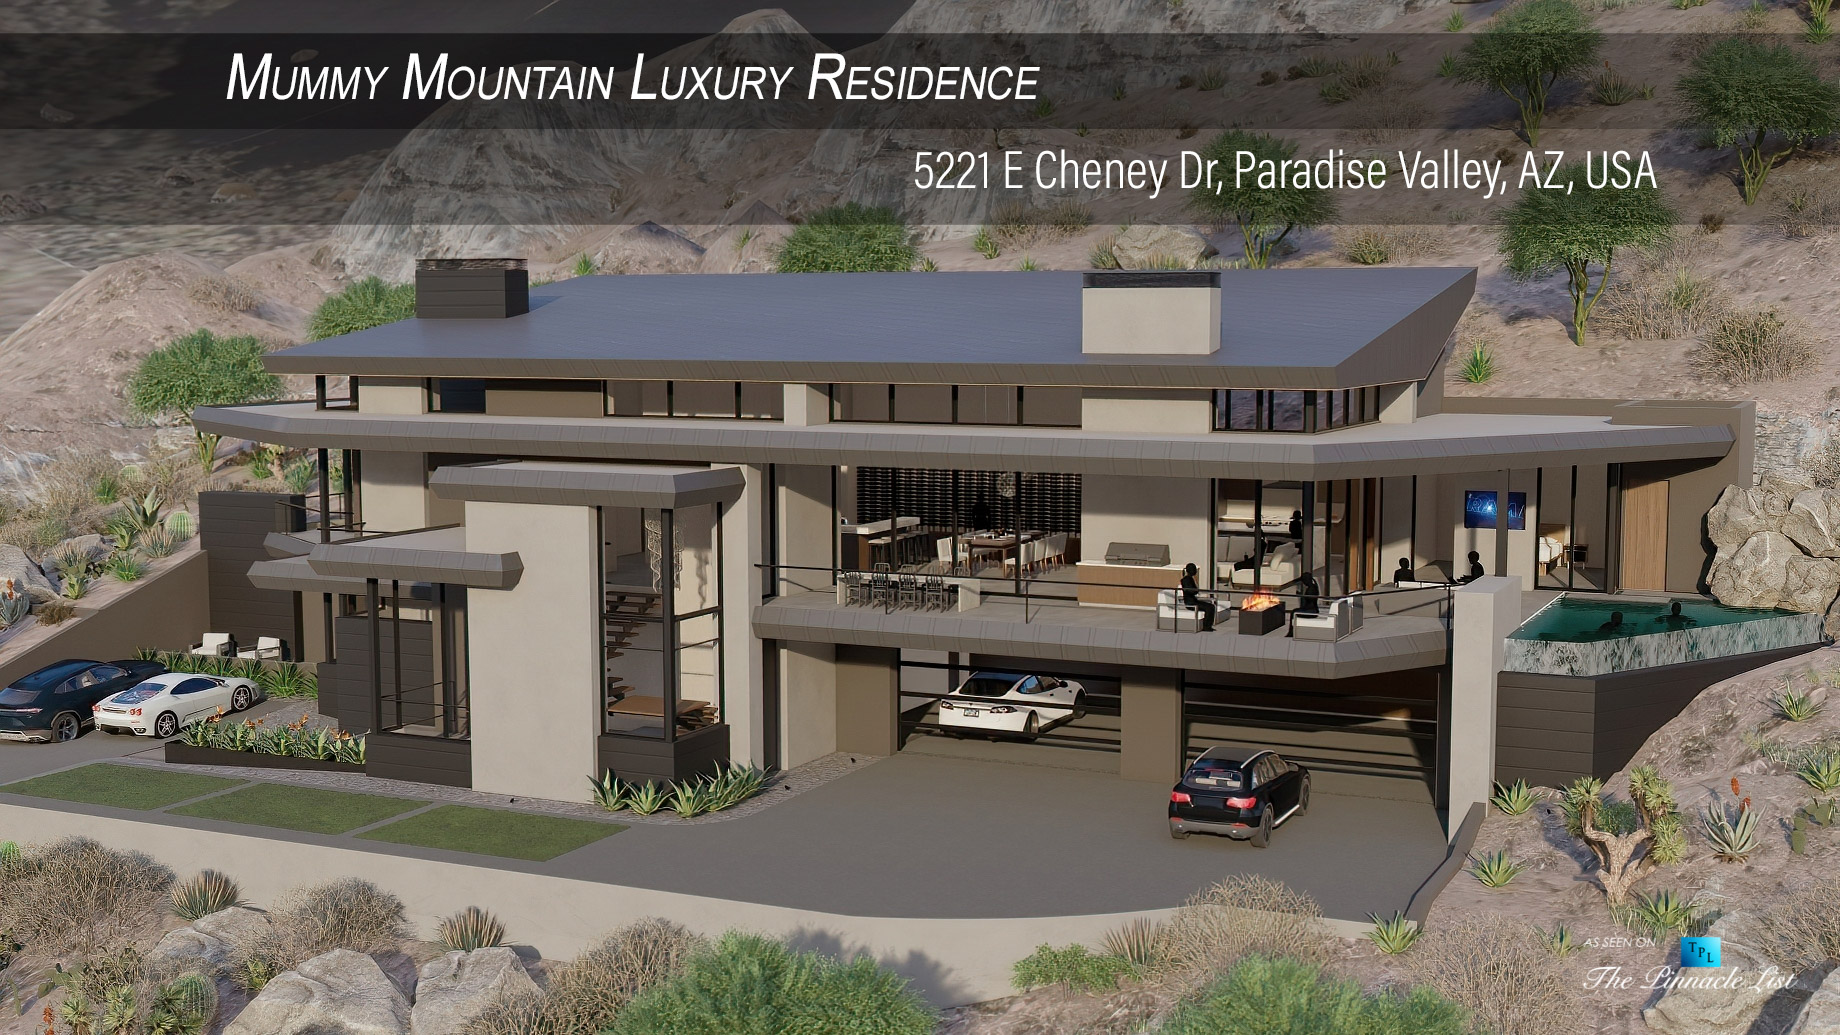 Mummy Mountain Luxury Residence – 5221 E Cheney Dr, Paradise Valley, AZ, USA